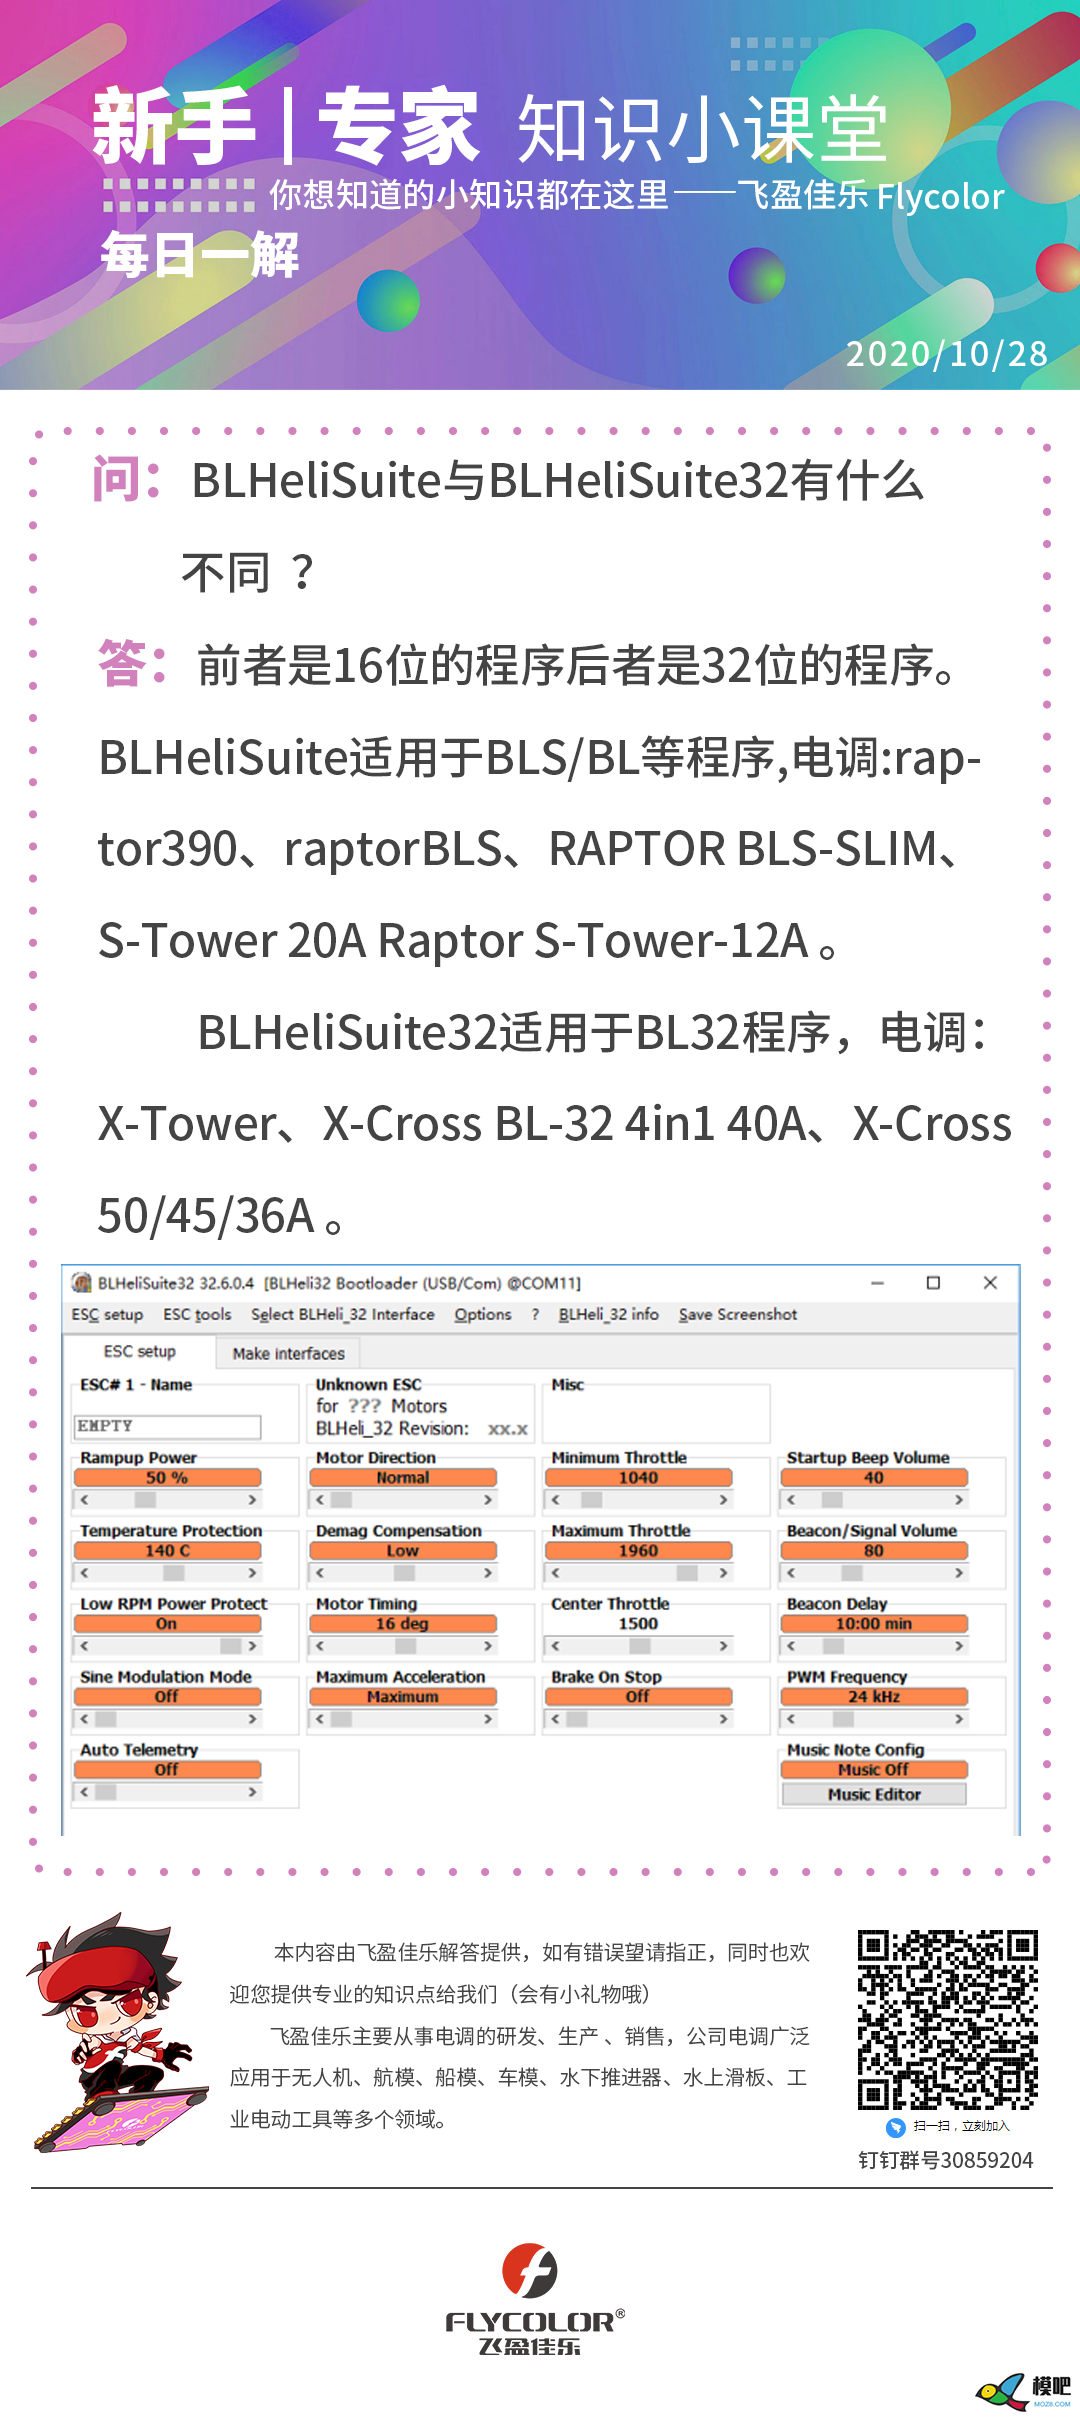 BLHeliSuite与BLHeliSuite32有什么不同？ 电调,BLheli,trapcode suite,blhelisuite32 作者:梦想的力量 9341 